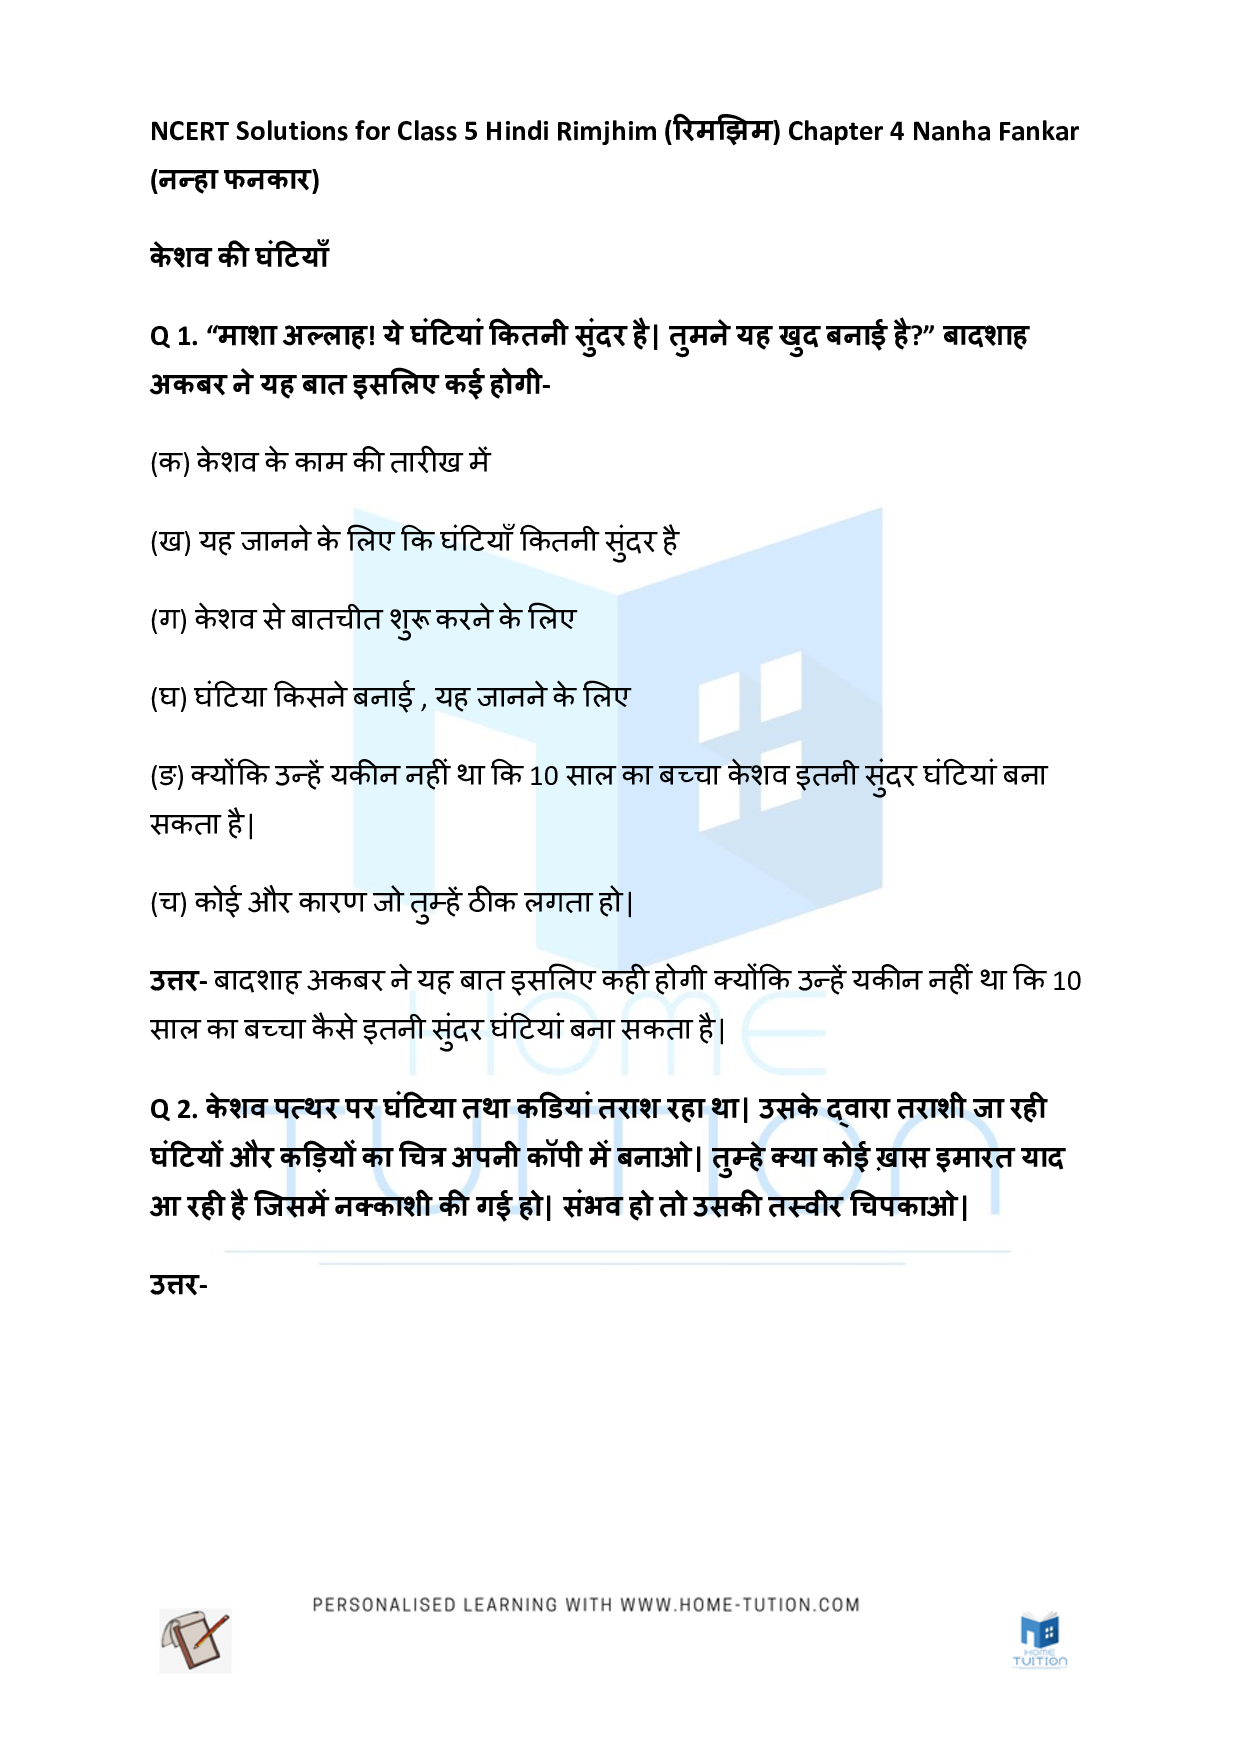 NCERT Solutions for Class 5 Hindi Rimjhim Chapter 4 नन्हा फनकार